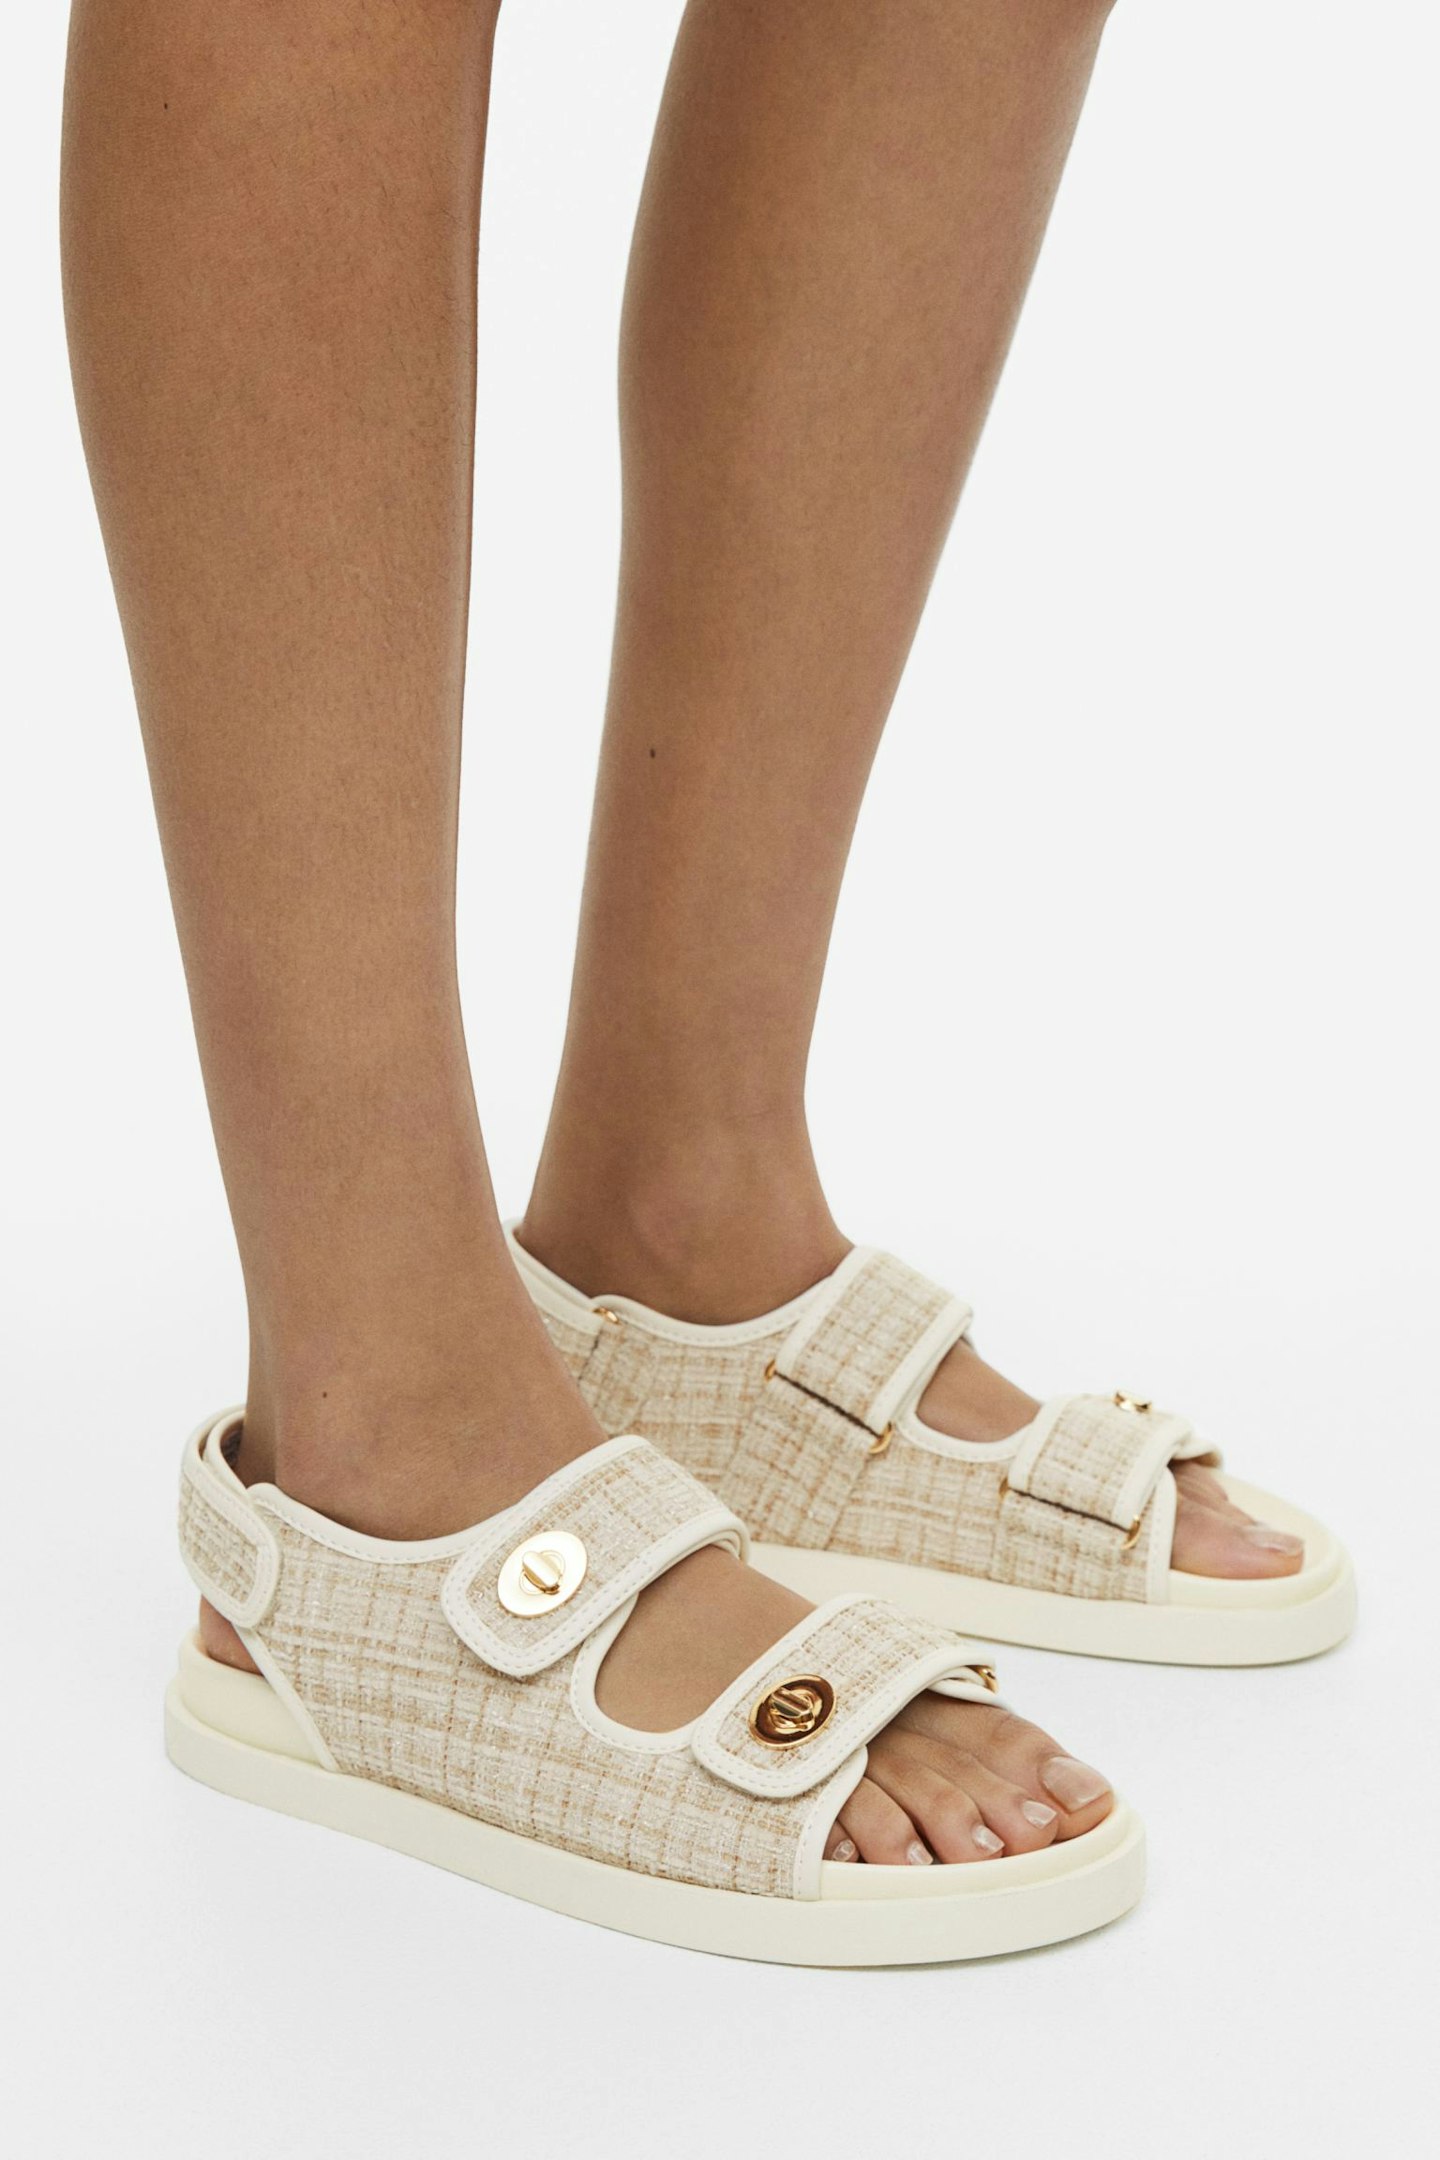 12 budget friendly dupes for Chanel's dad sandals – Pumps & Protractors